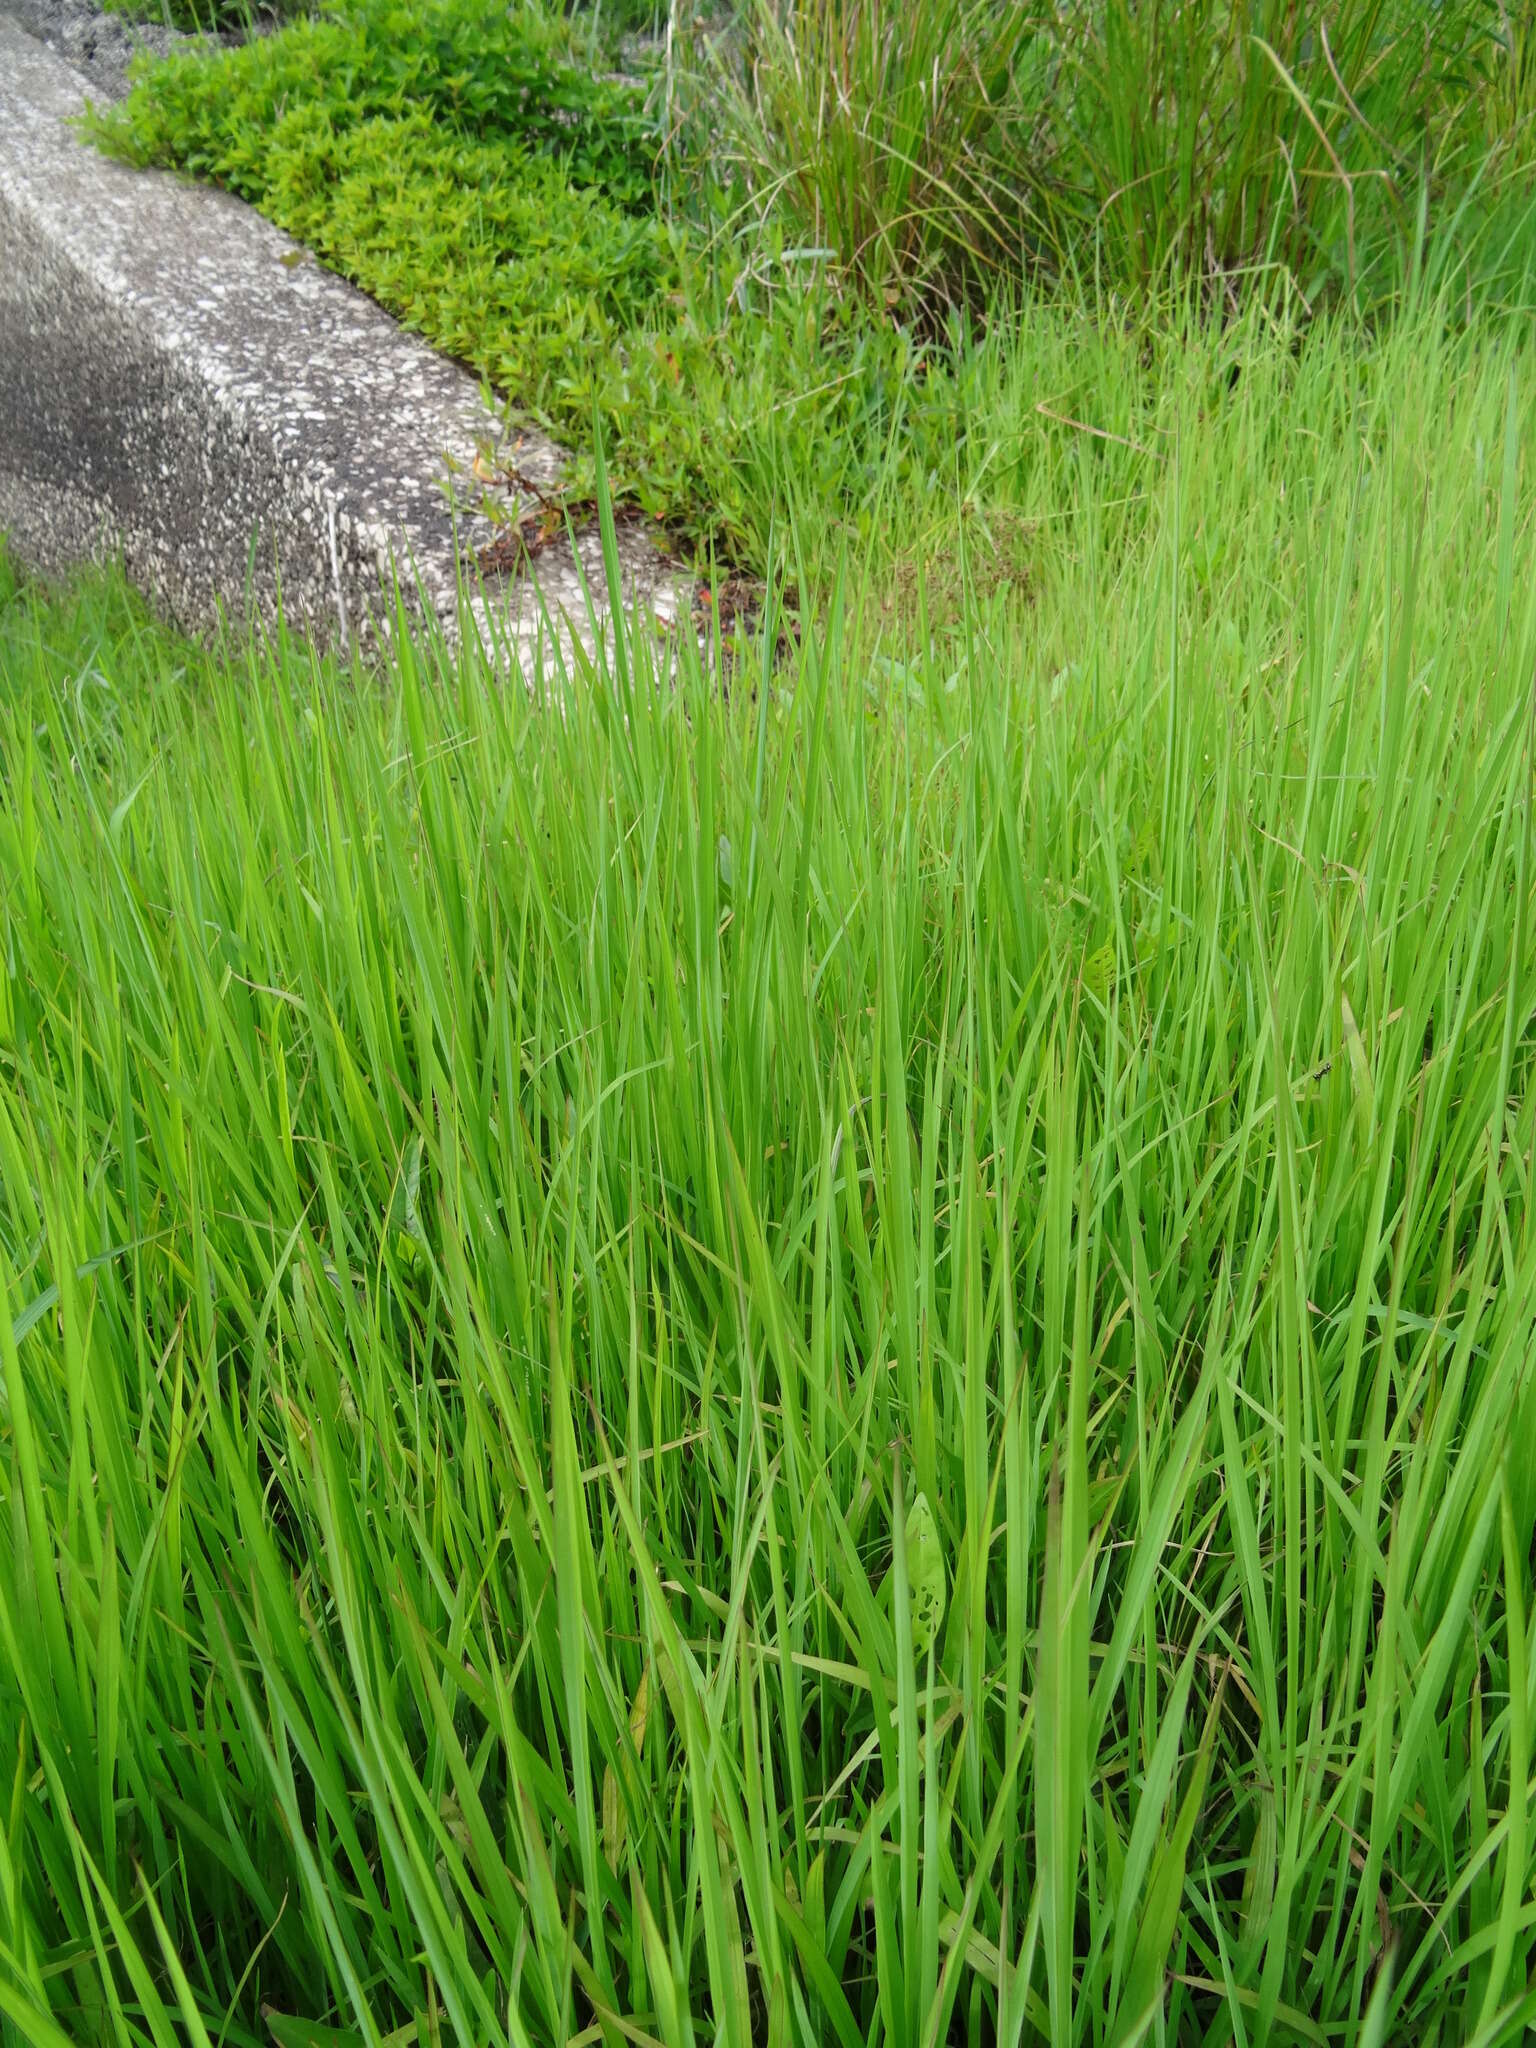 Image of Cut-grass